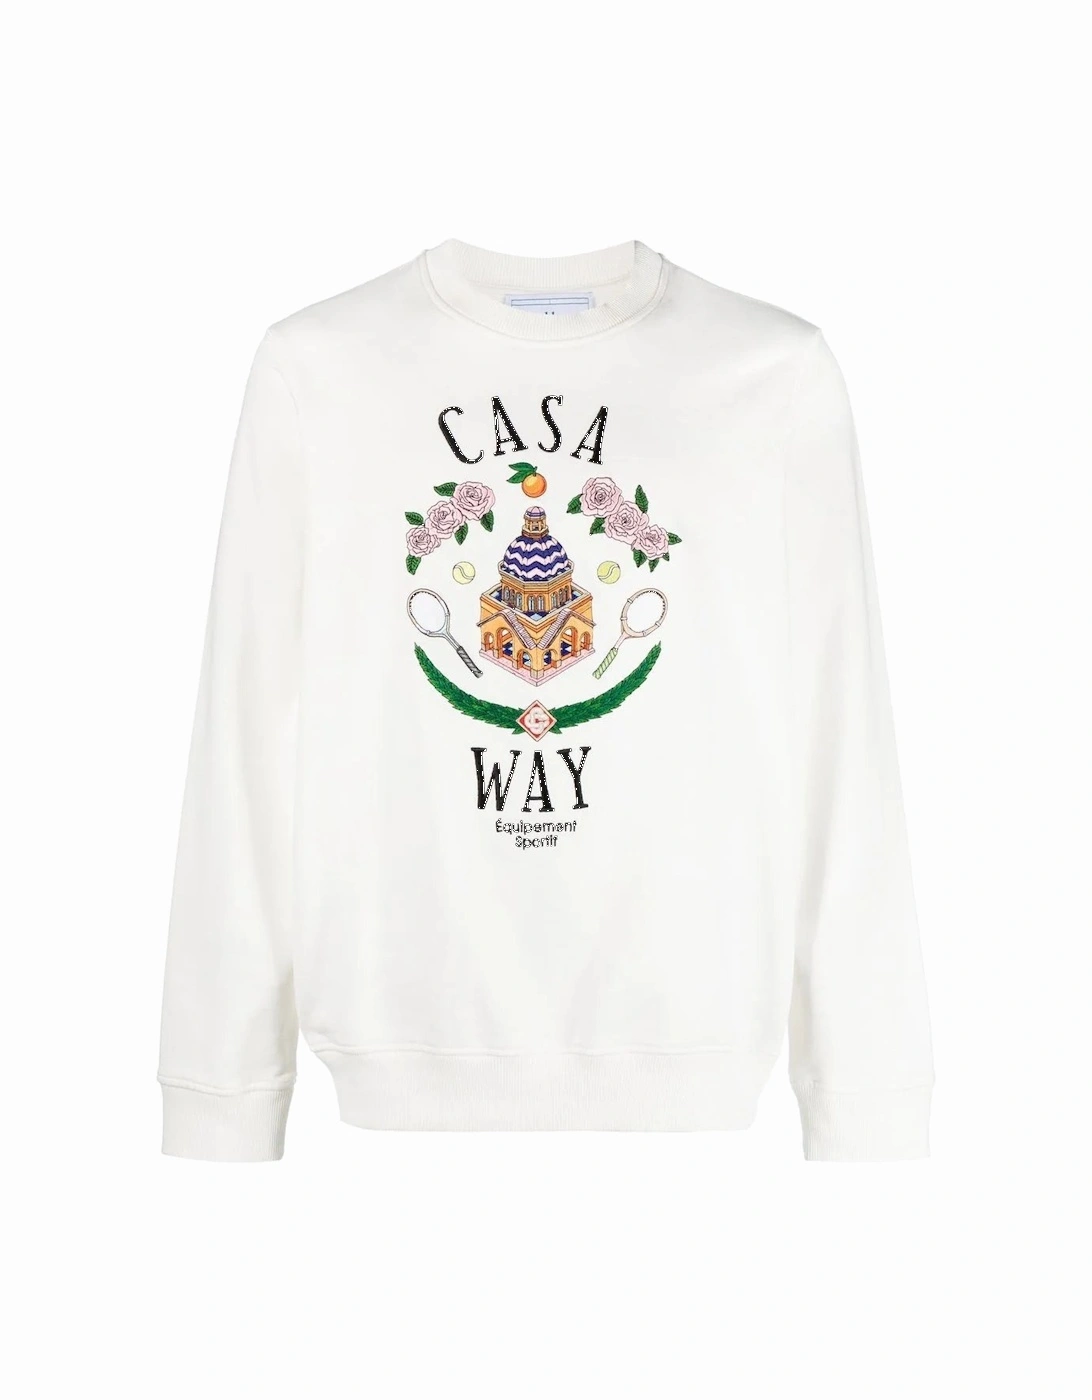 Casa Way Embroidered Sweatshirt in White, 6 of 5